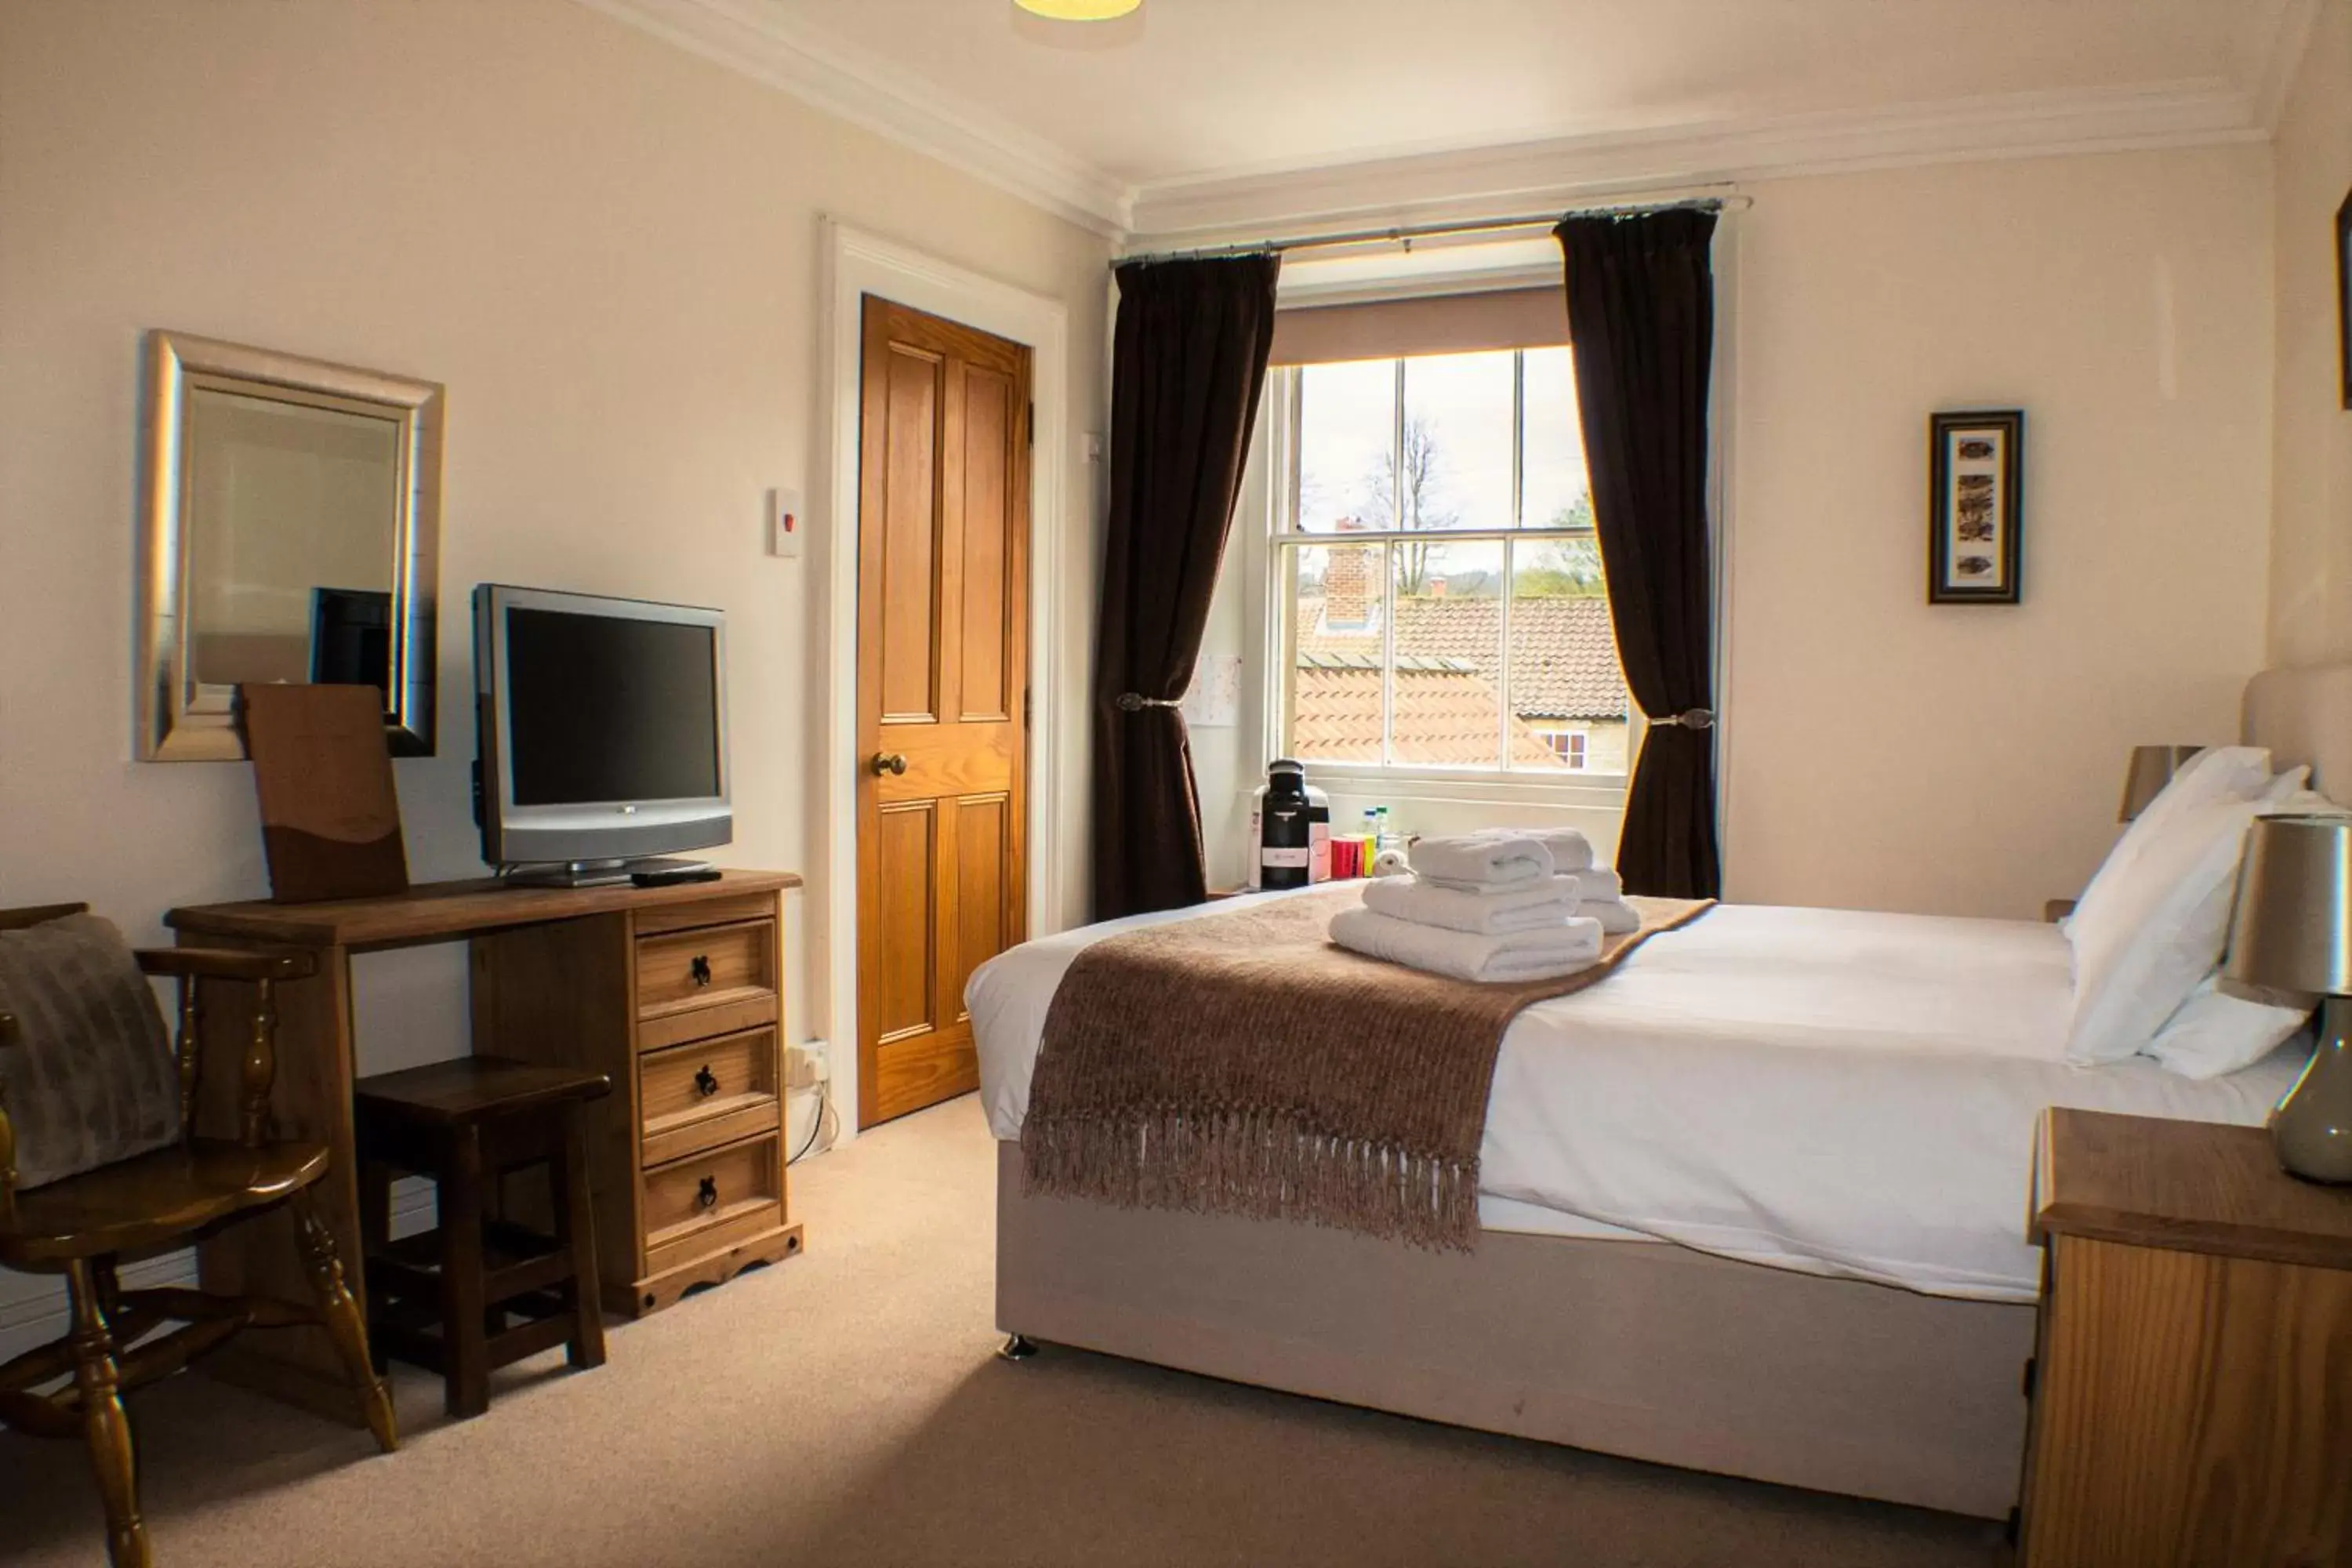 Bedroom, Room Photo in The Royal Oak Hotel